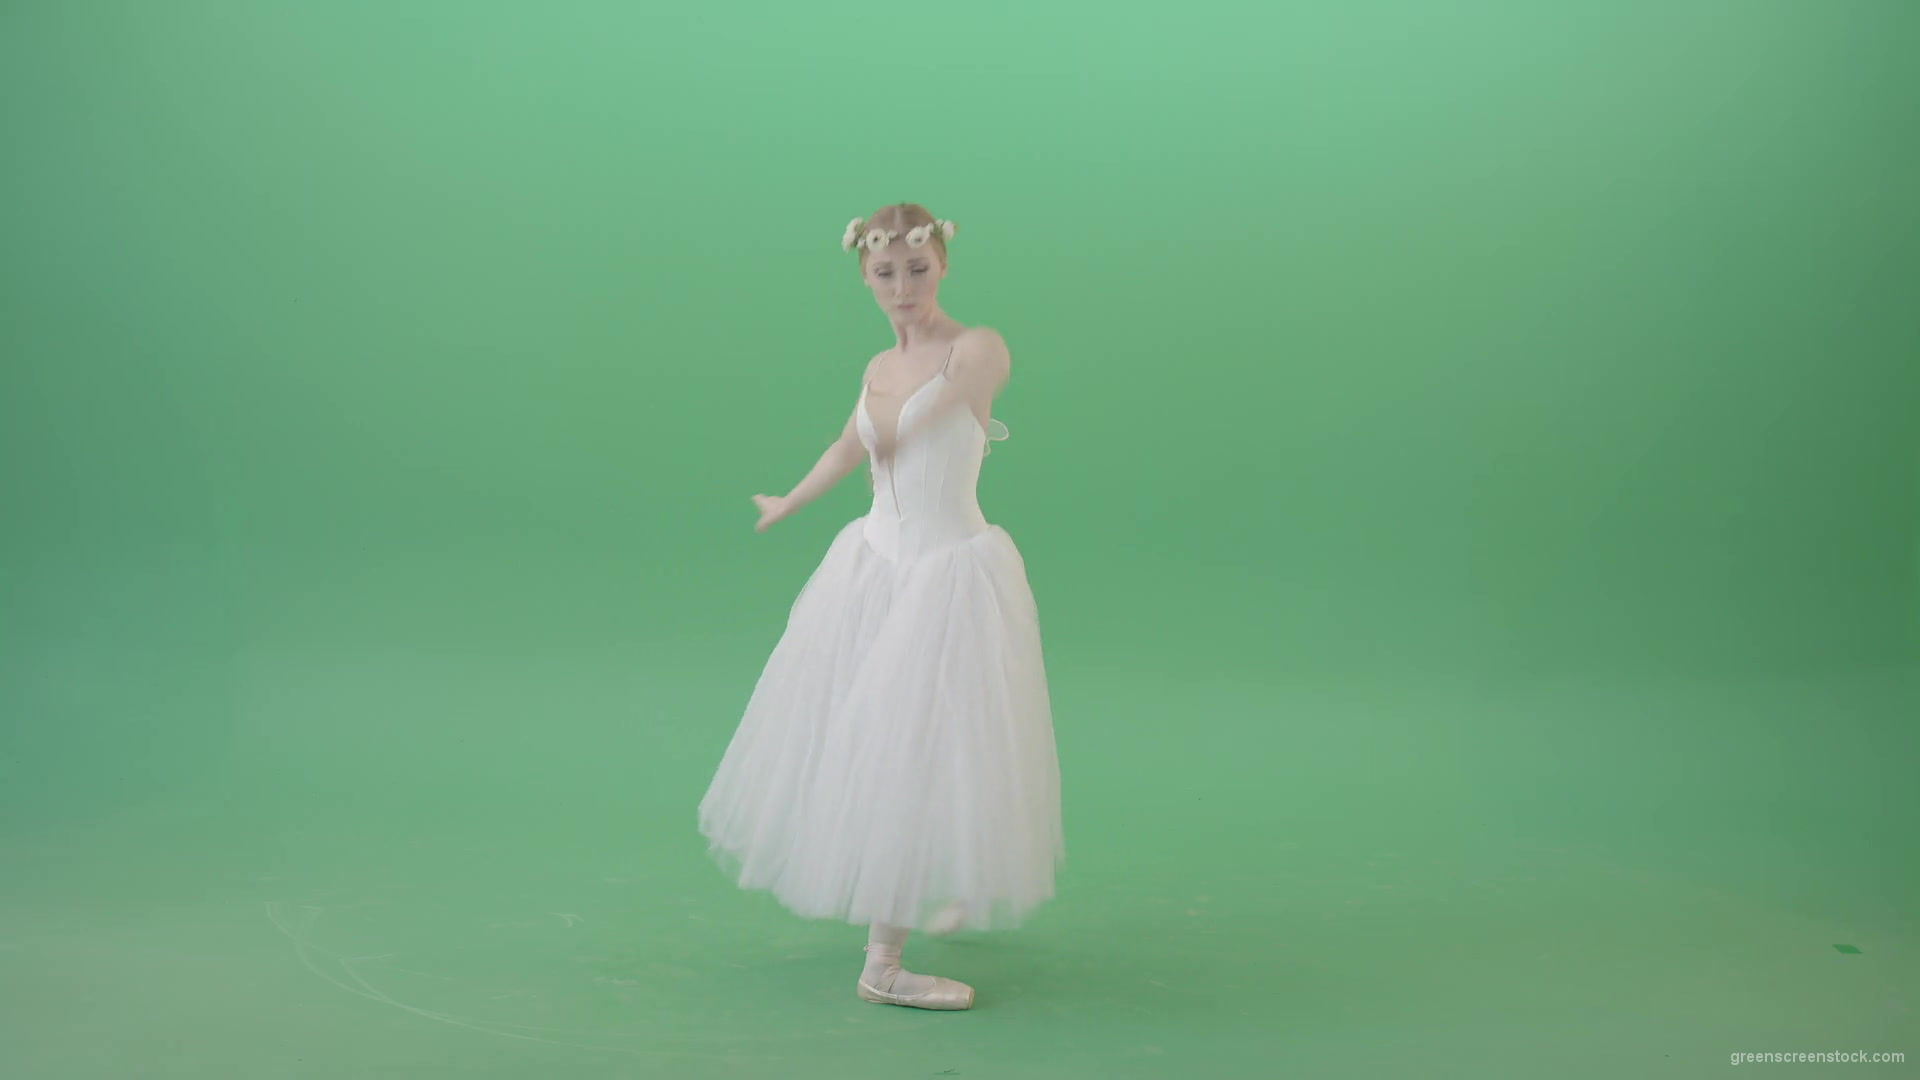 Royal-elegant-greetings-regards-by-Ballet-Dancer-Girl-in-White-Dress-on-Green-Screen-4K-Video-Clip-1920_006 Green Screen Stock